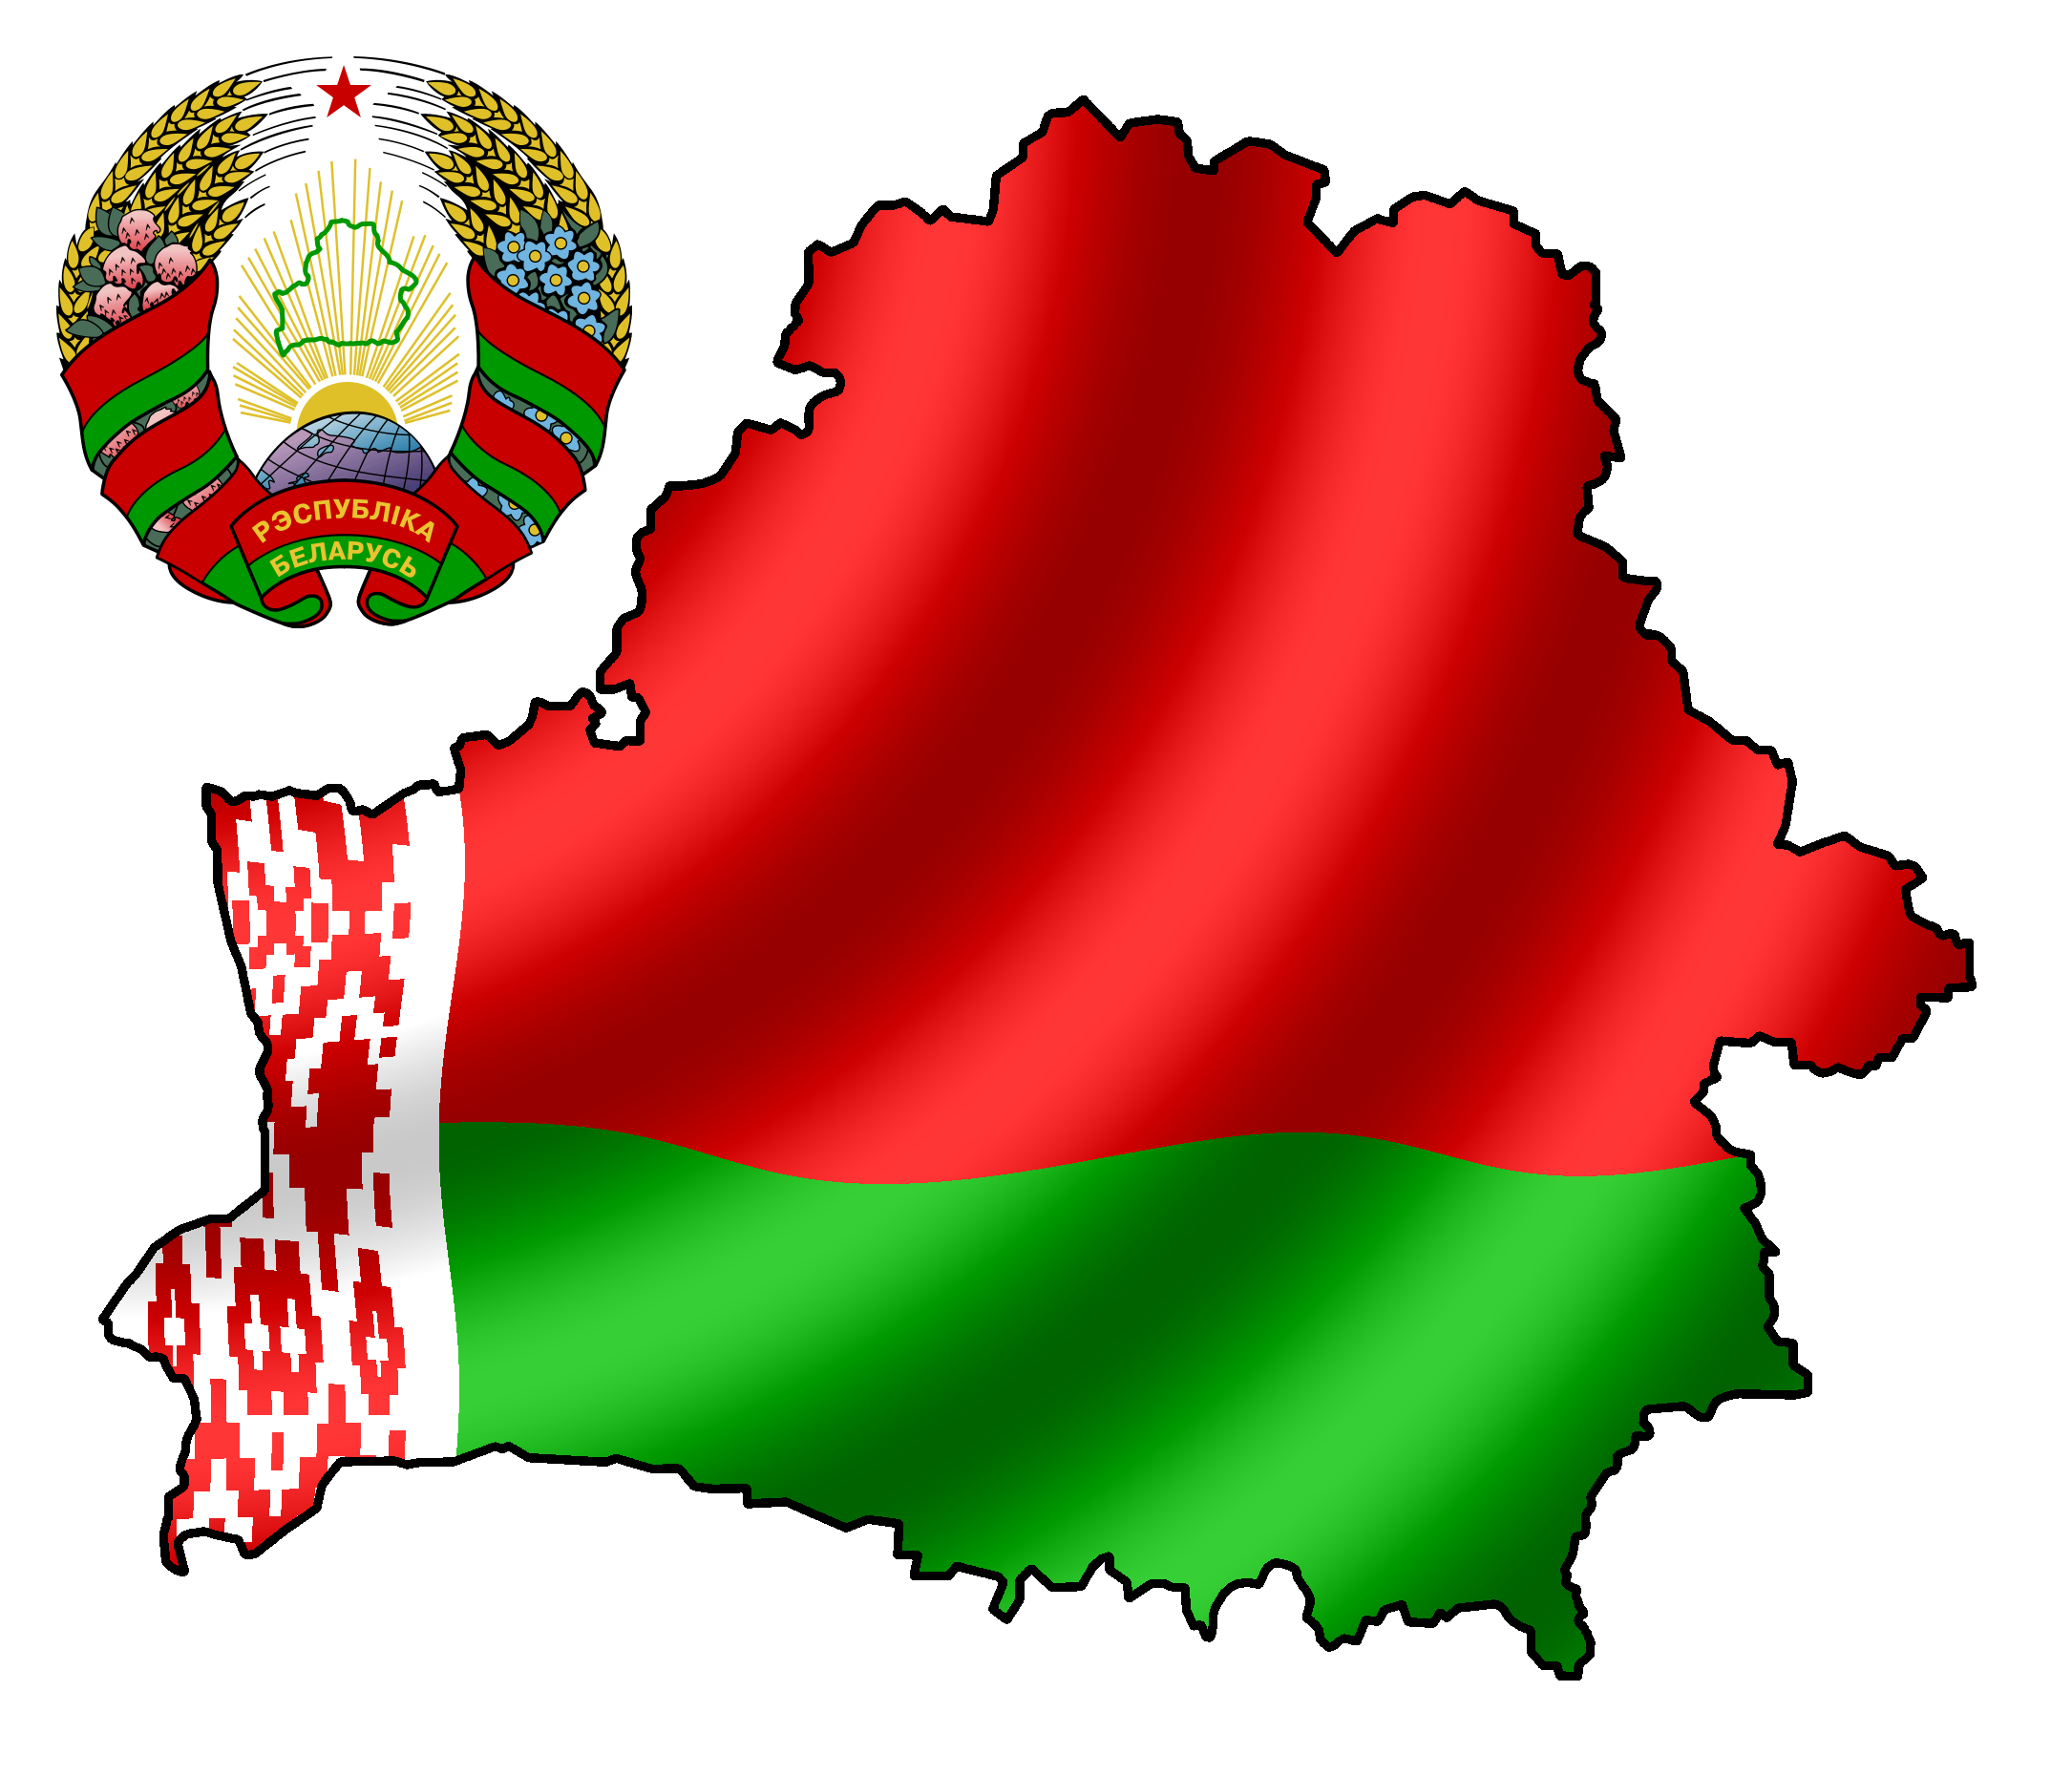 Герб и флаг республики беларусь на прозрачном фоне фото